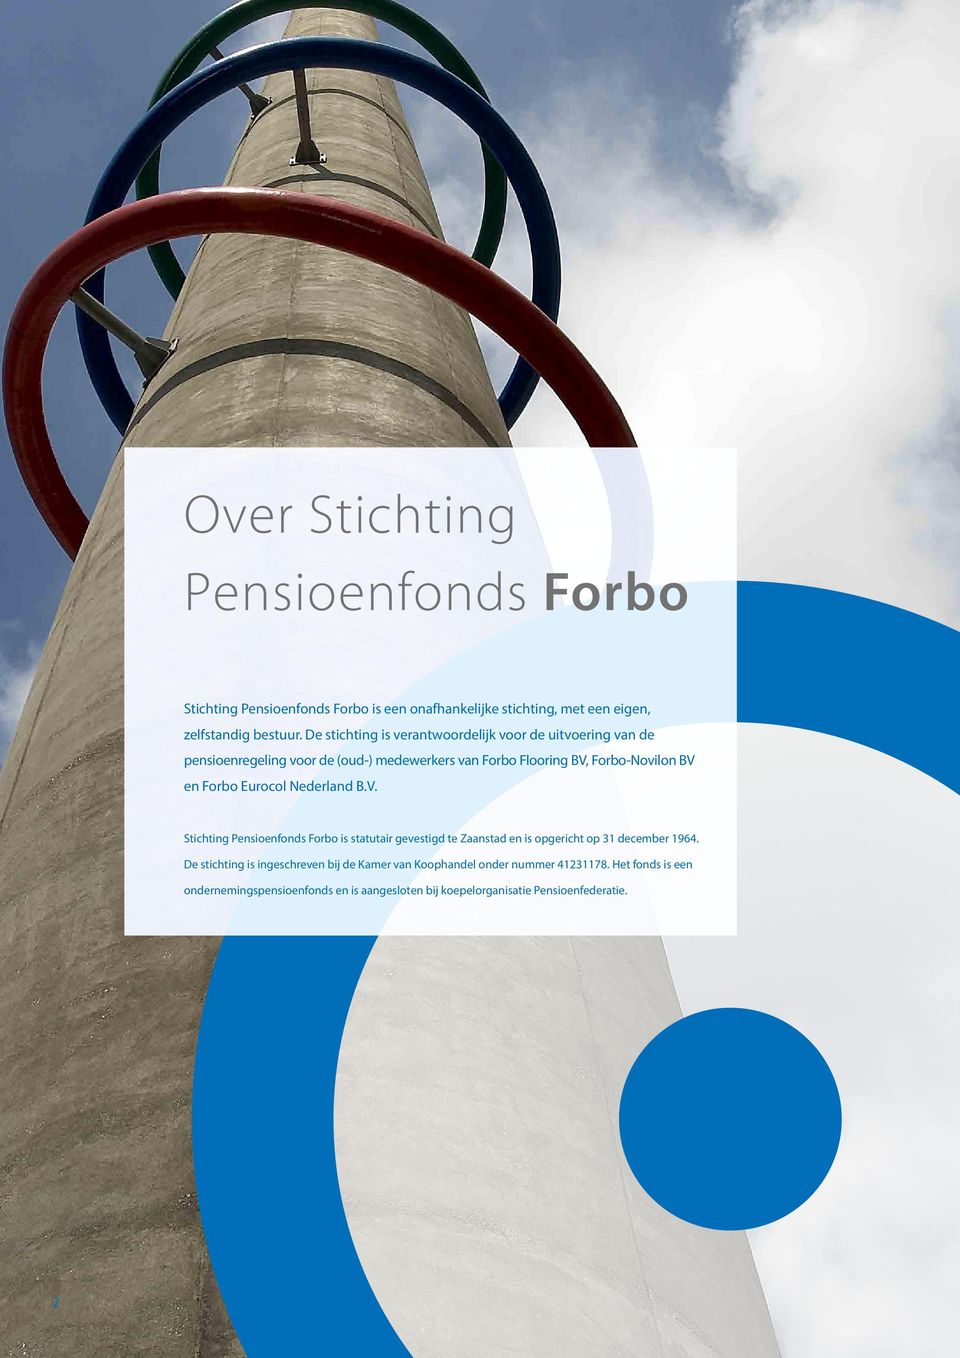 Forbo Eurocol Nederland B.V. Stichting Pensioenfonds Forbo is statutair gevestigd te Zaanstad en is opgericht op 31 december 1964.